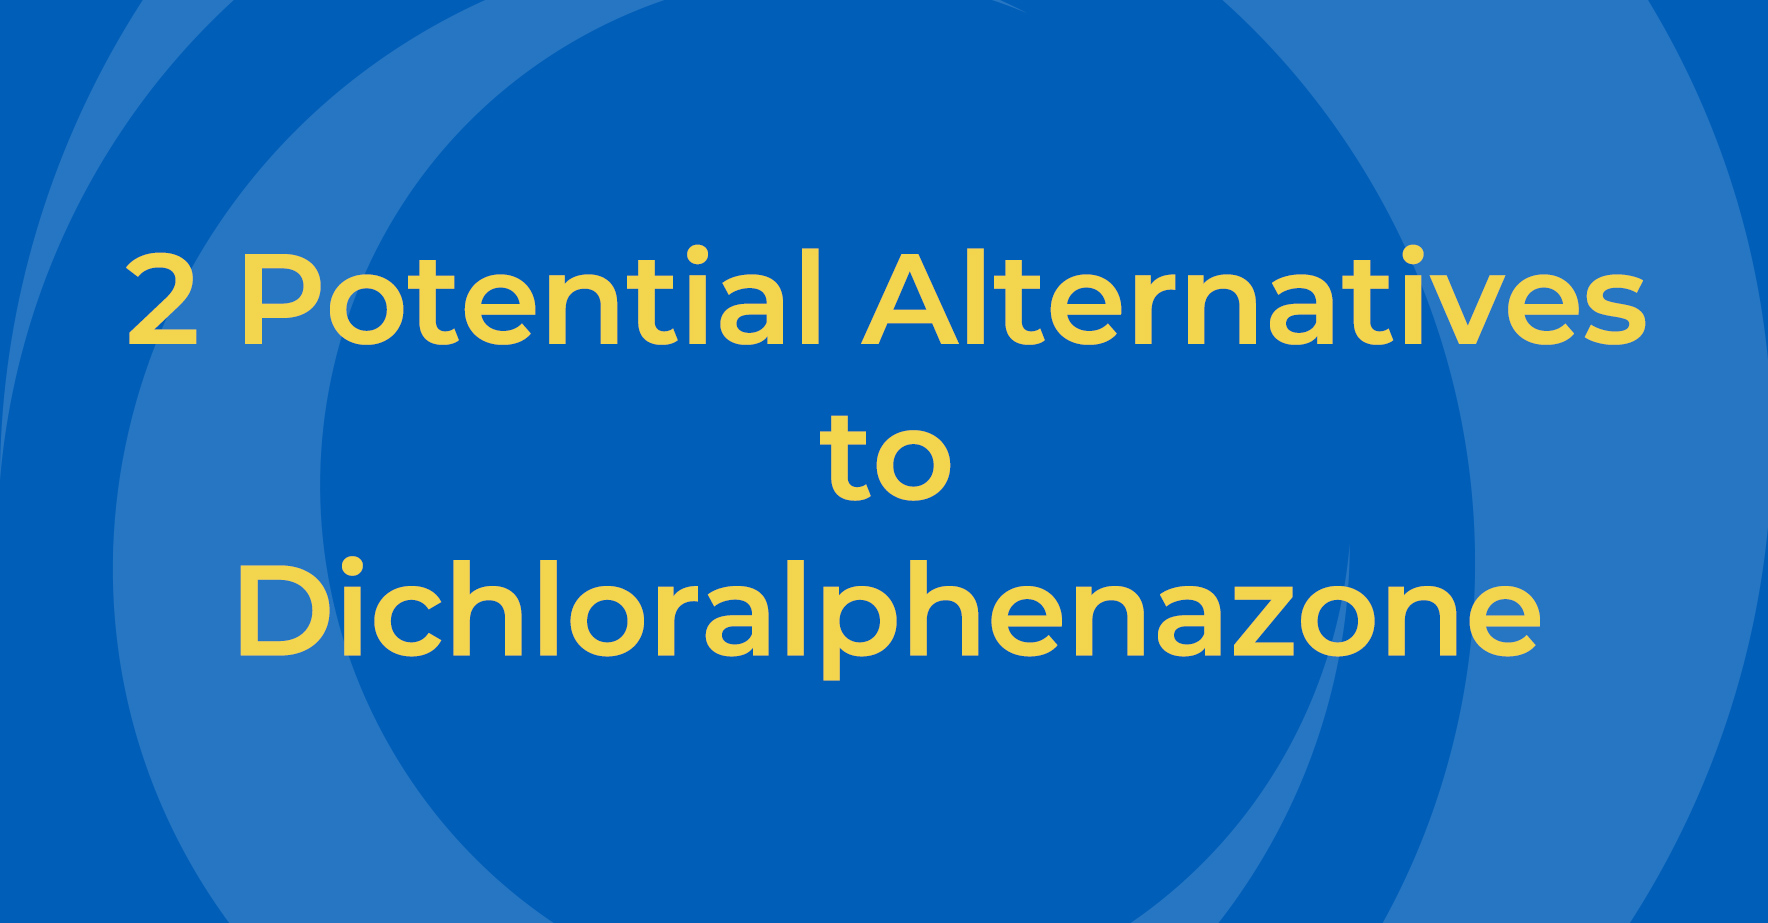 2 _potential_alternatives_to_dichloralphenazone.jpg